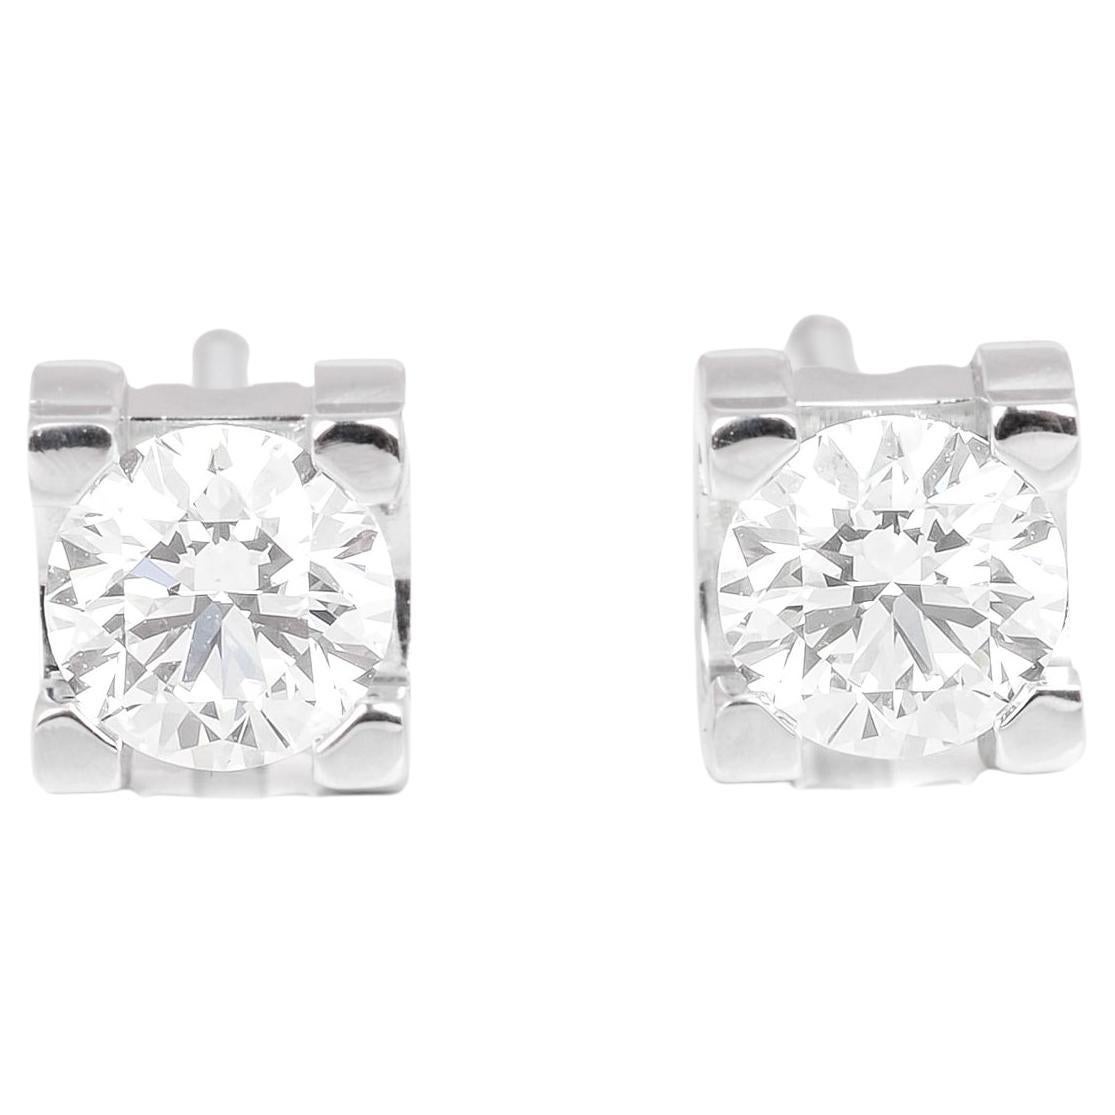 Cartier C De Cartier 0.4ct Diamond Stud Earrings